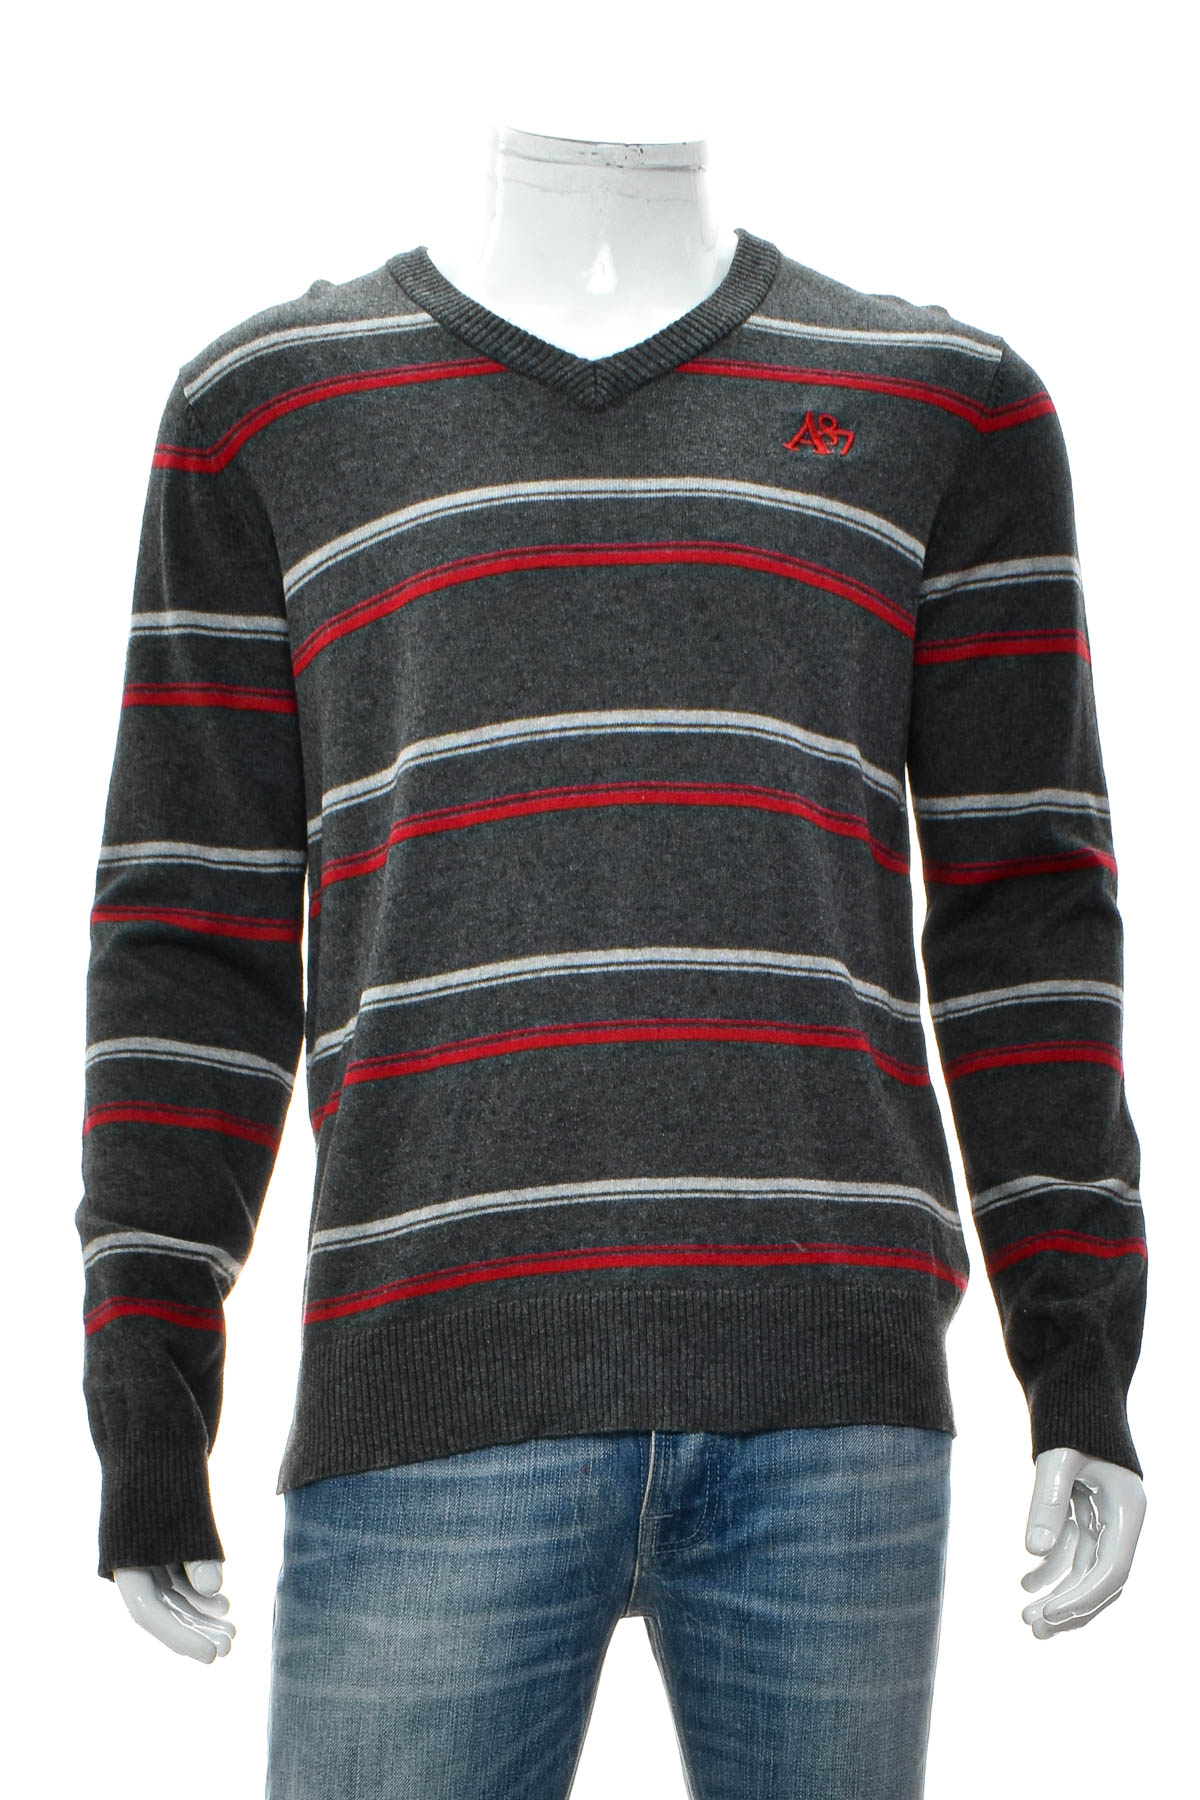 Men's sweater - Aeropostale - 0